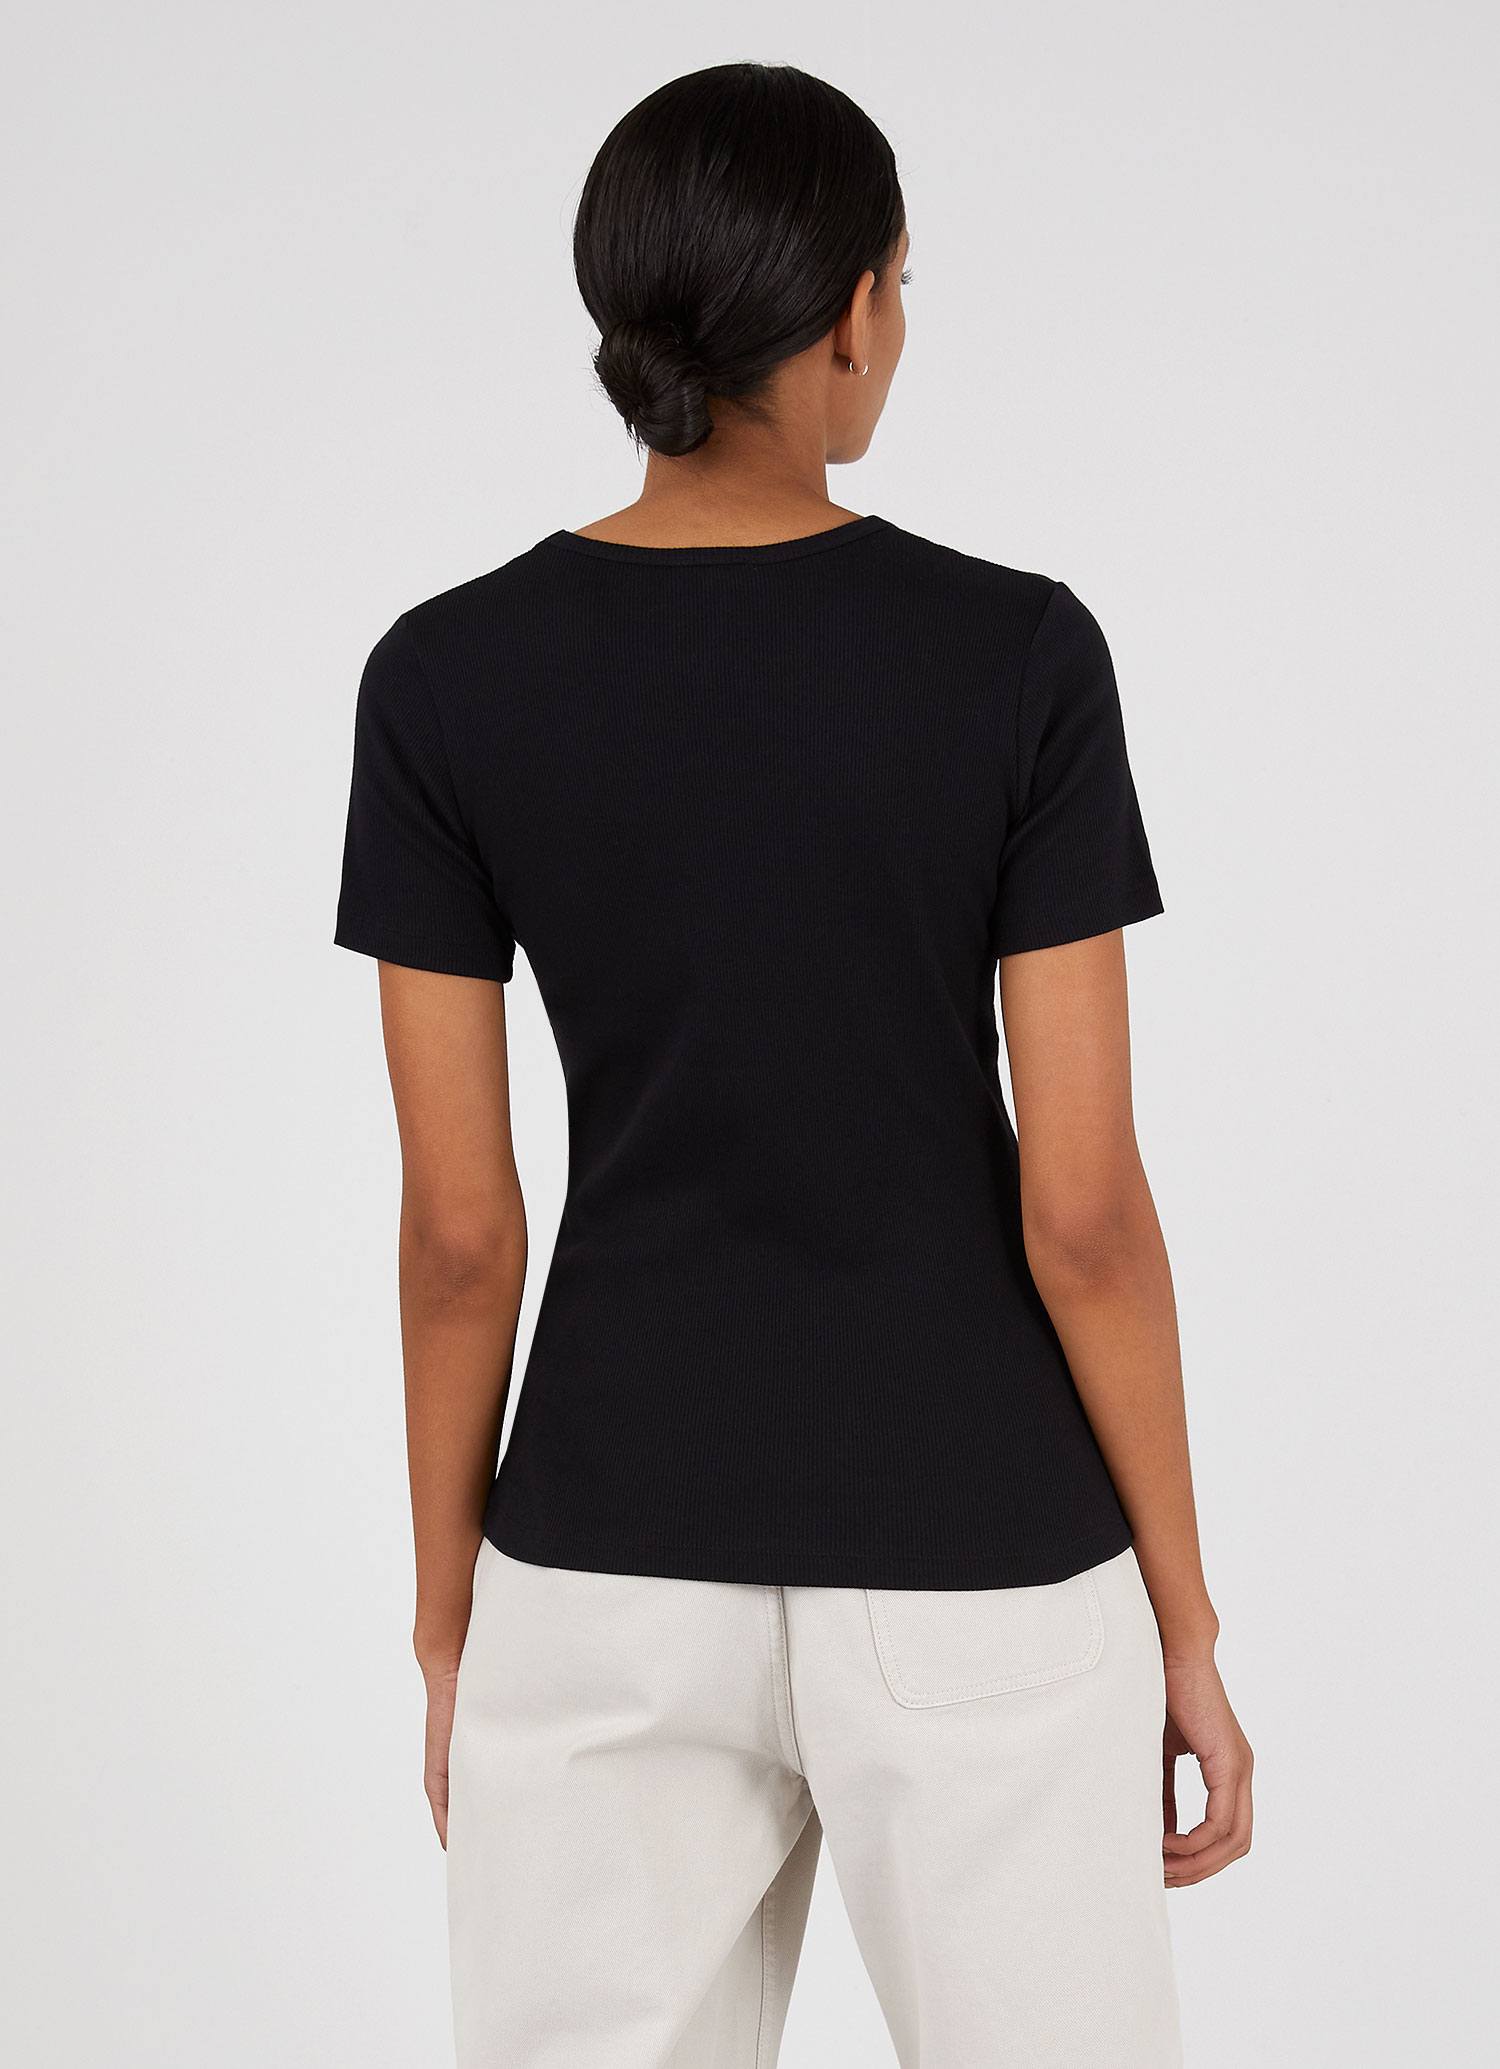 Women's Rib T-shirt in Black | Sunspel